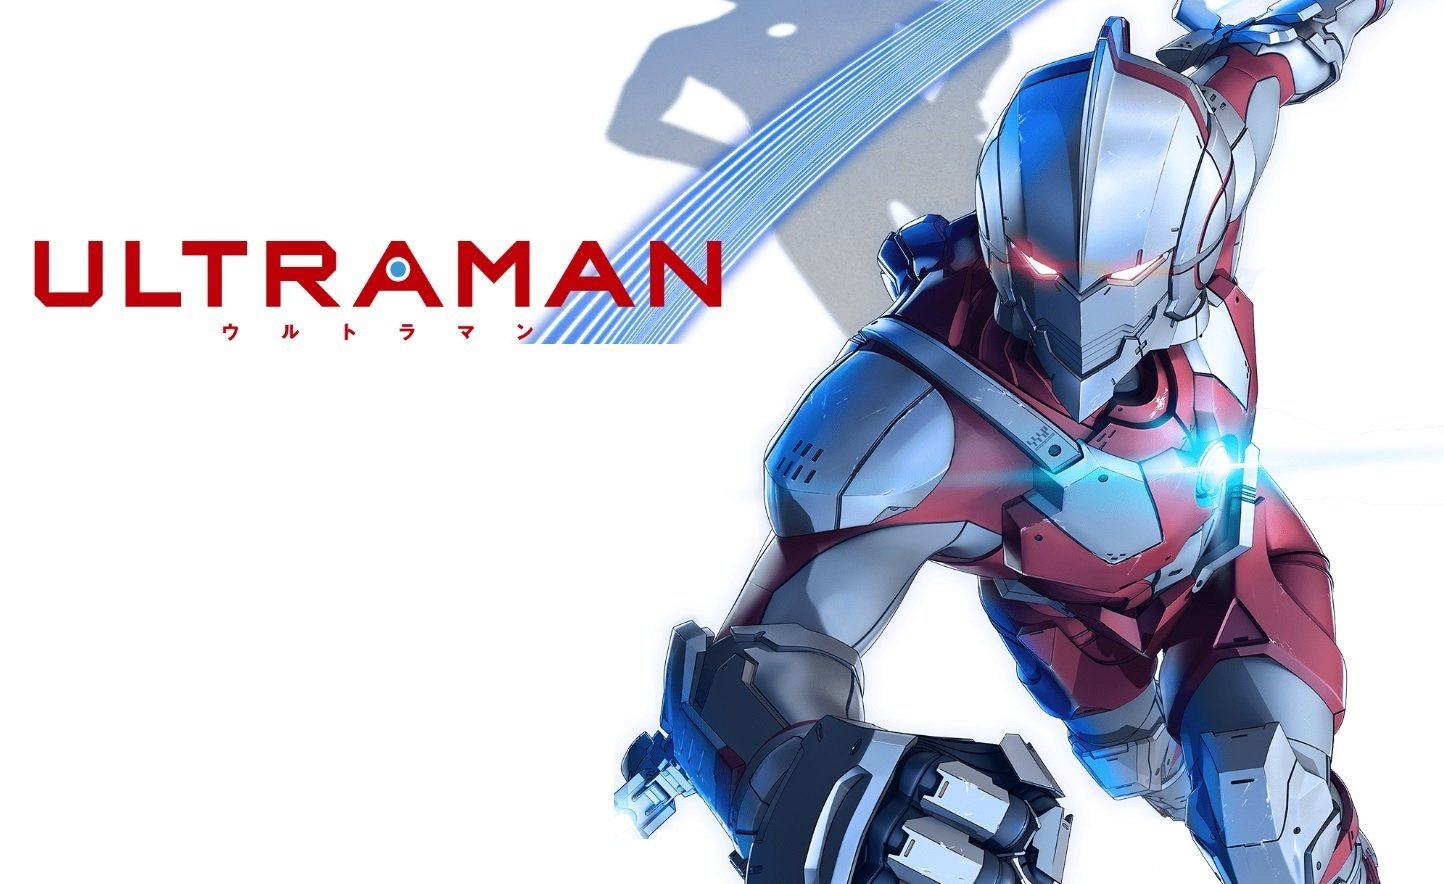 Ultraman en marvel poster